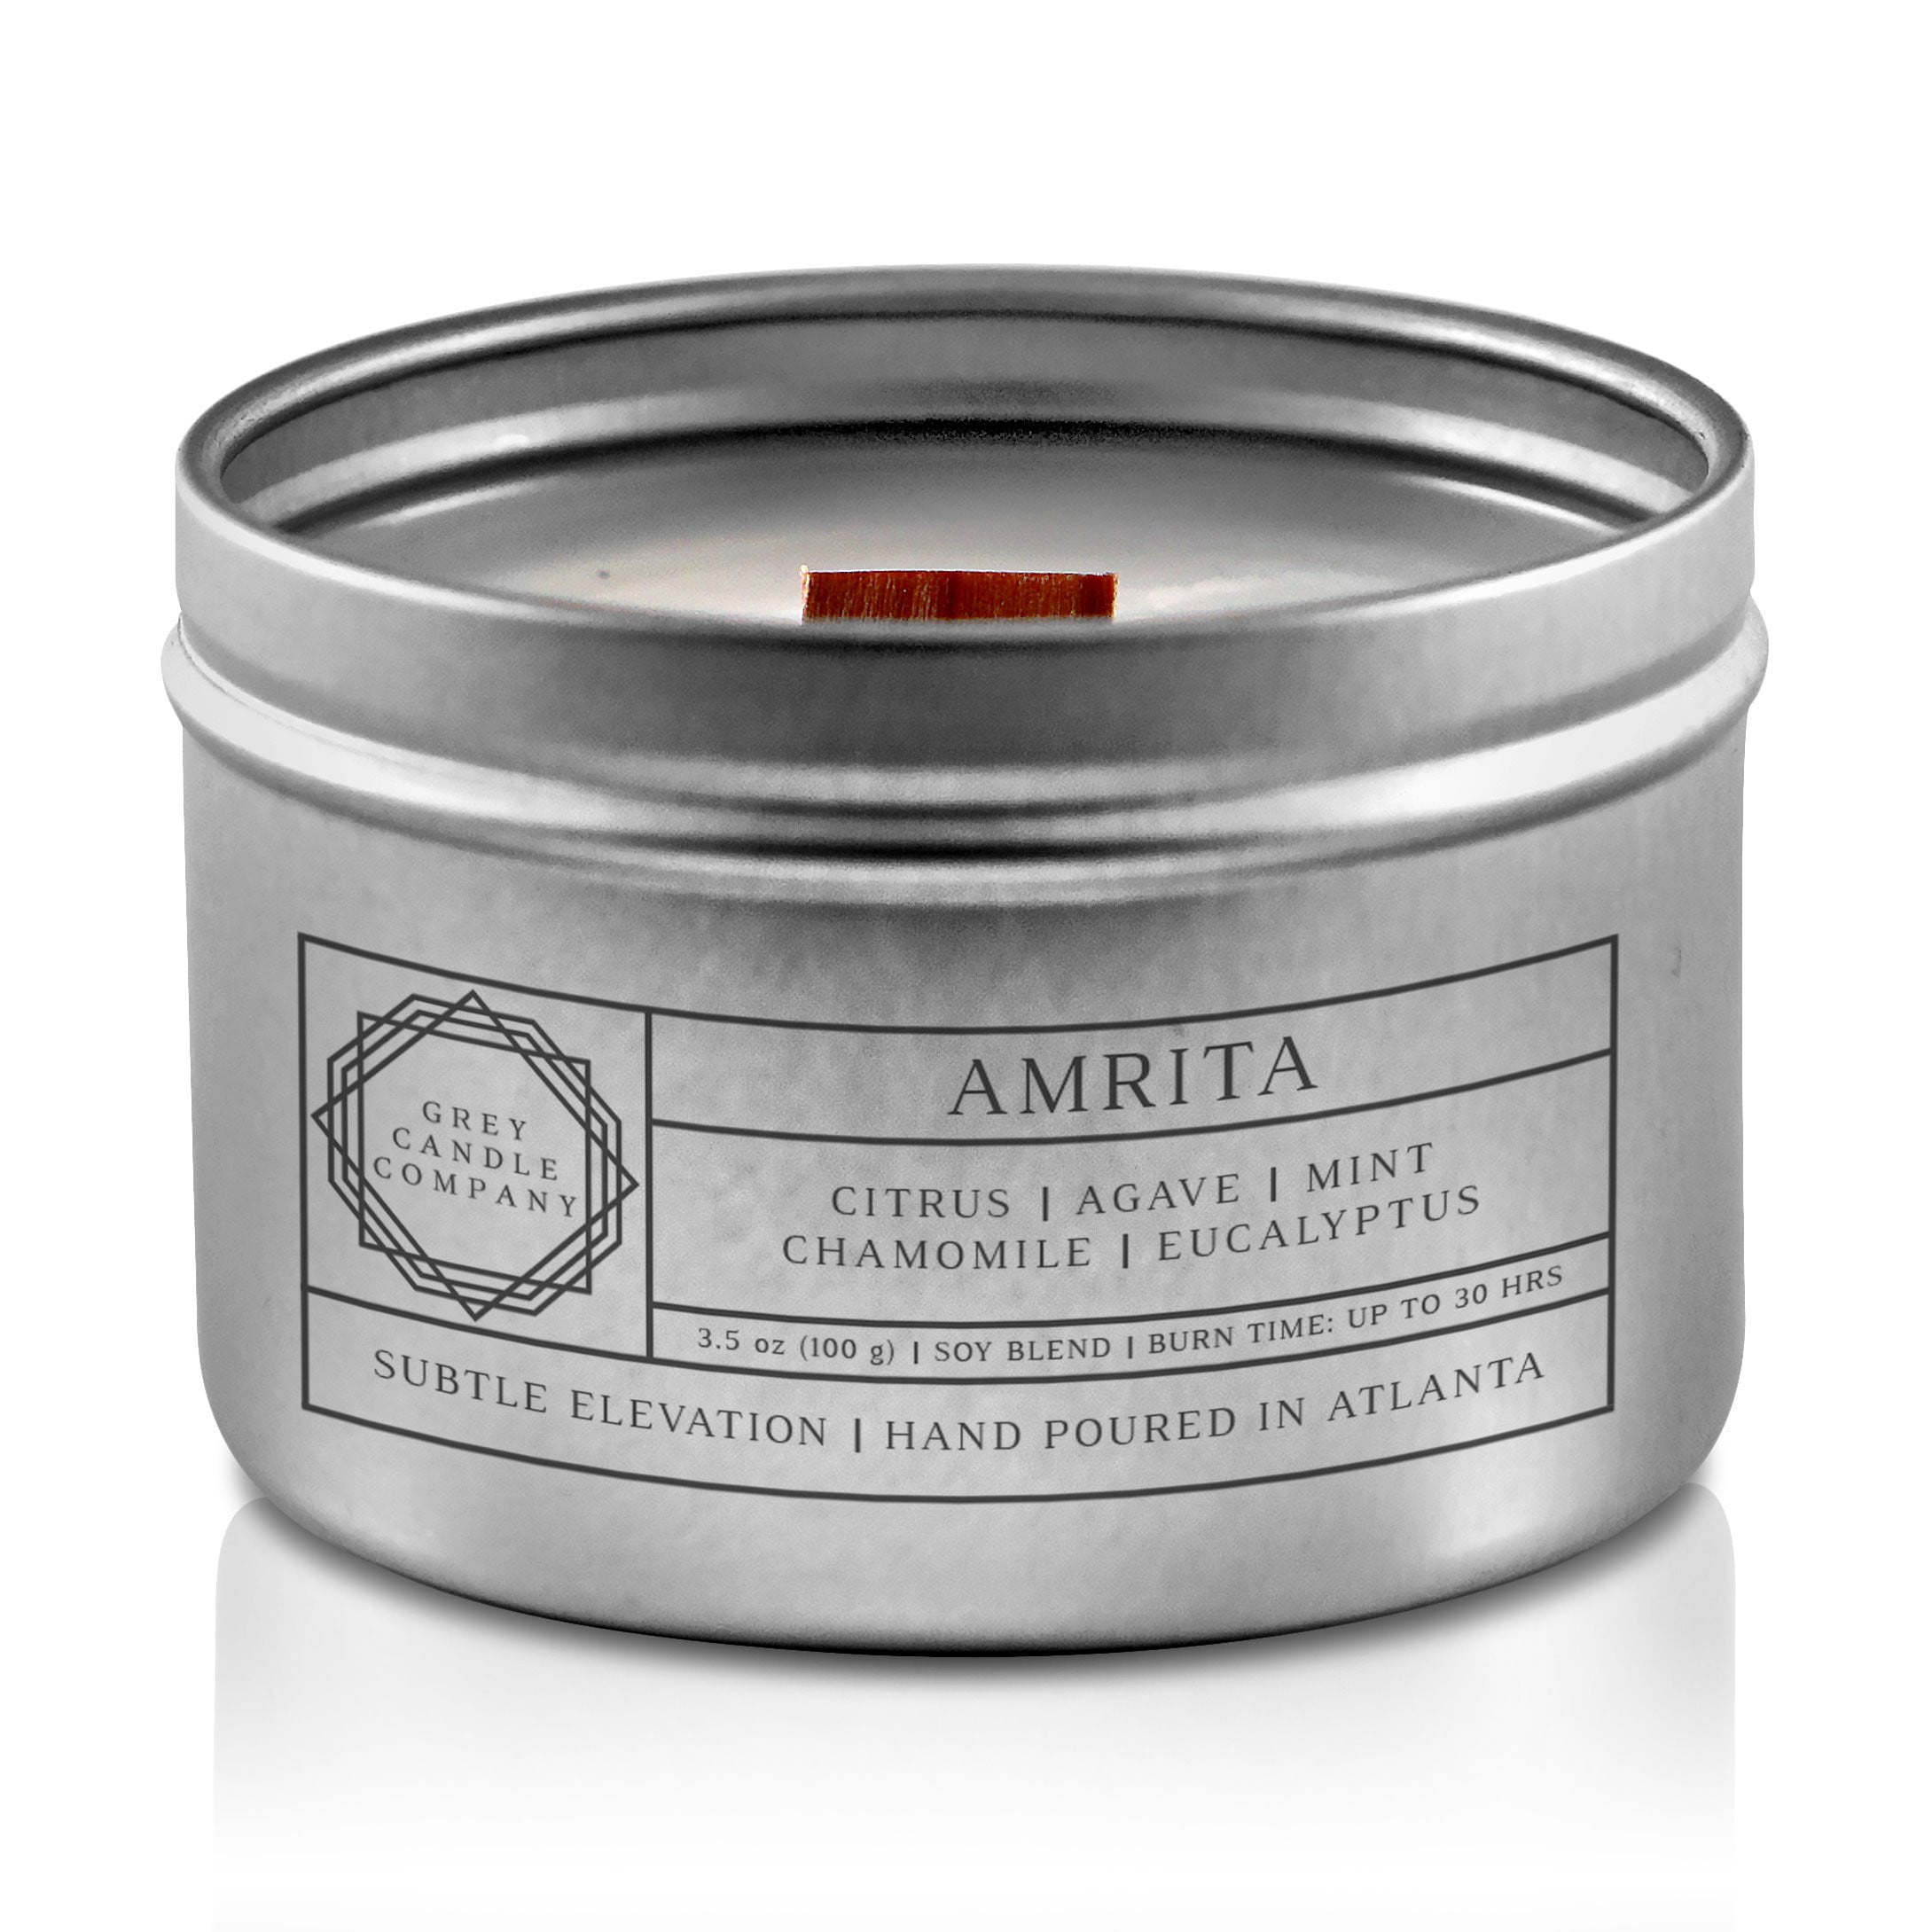 AMRITA CANDLES Grey Candle Company 3.5 oz. TIN 